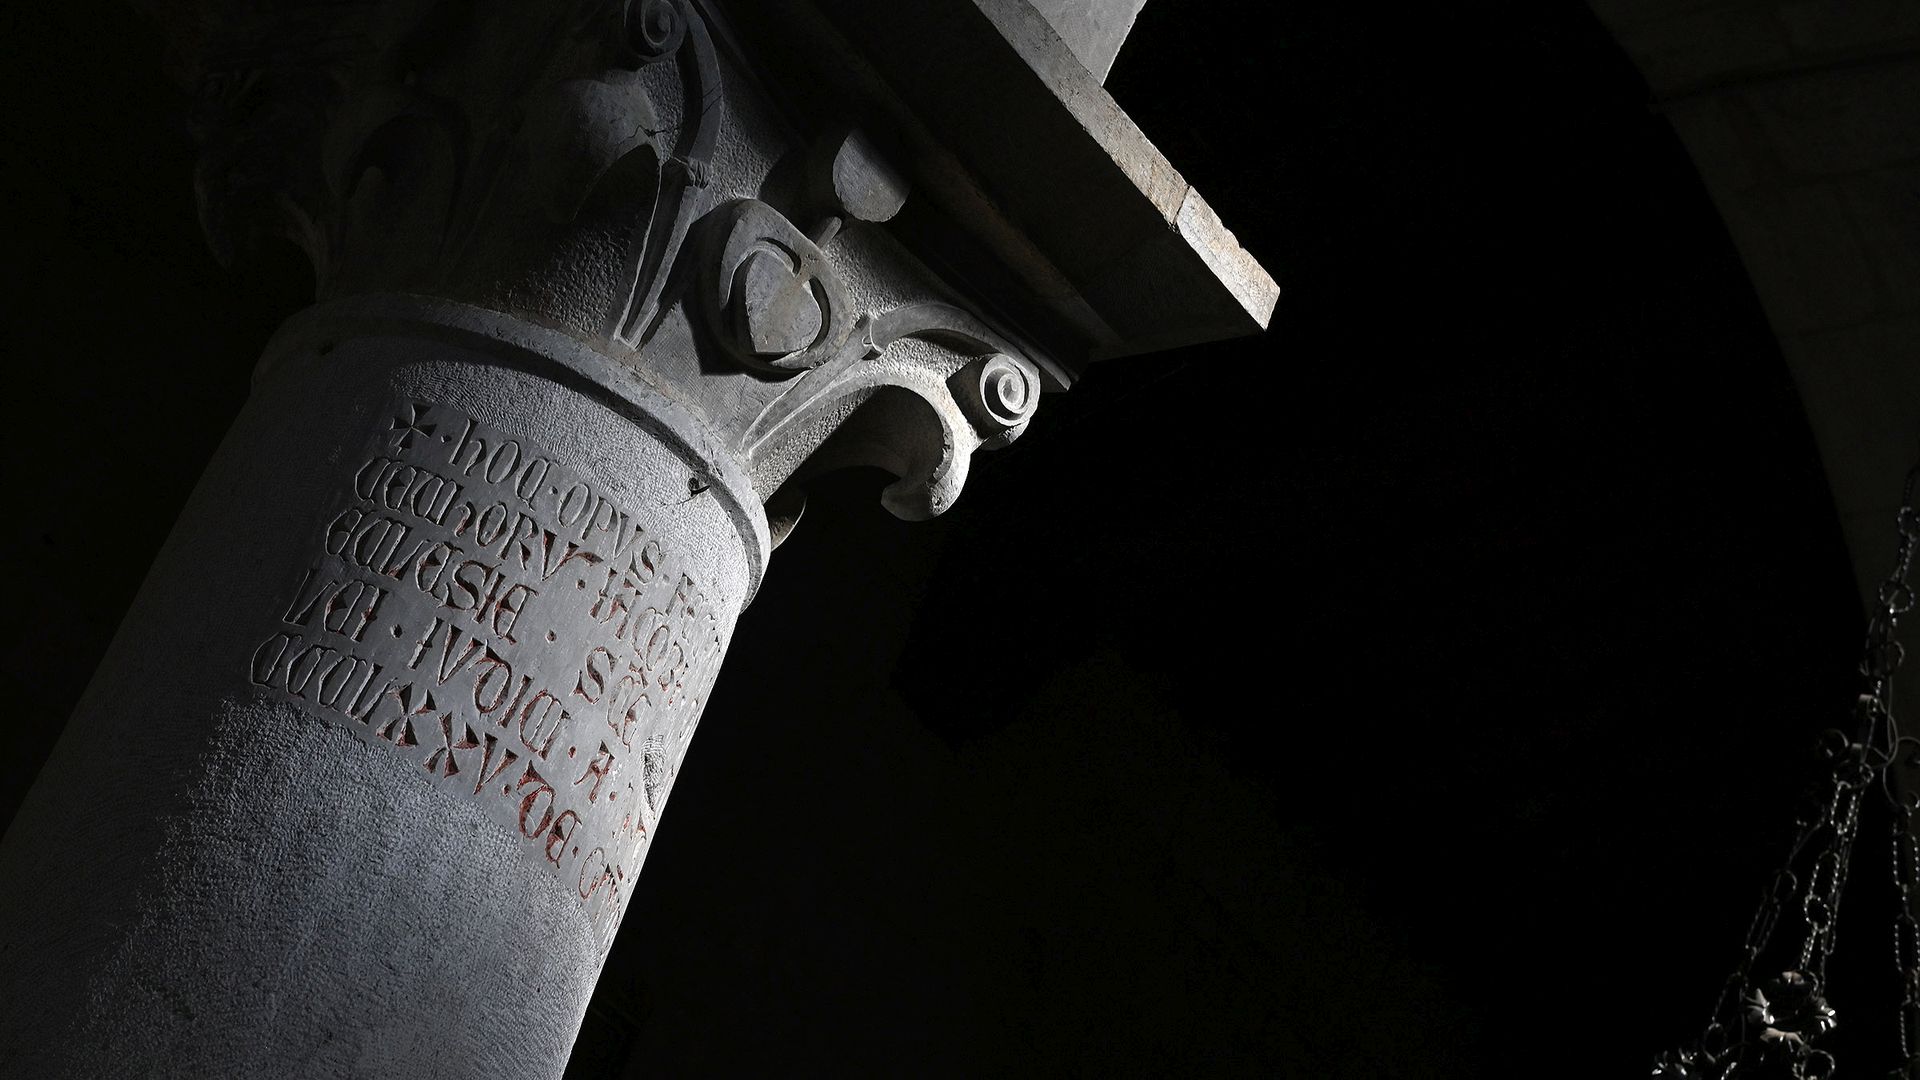 inscripción en un capitel de la iglesia parroquial de santa maria del giudice de lucca